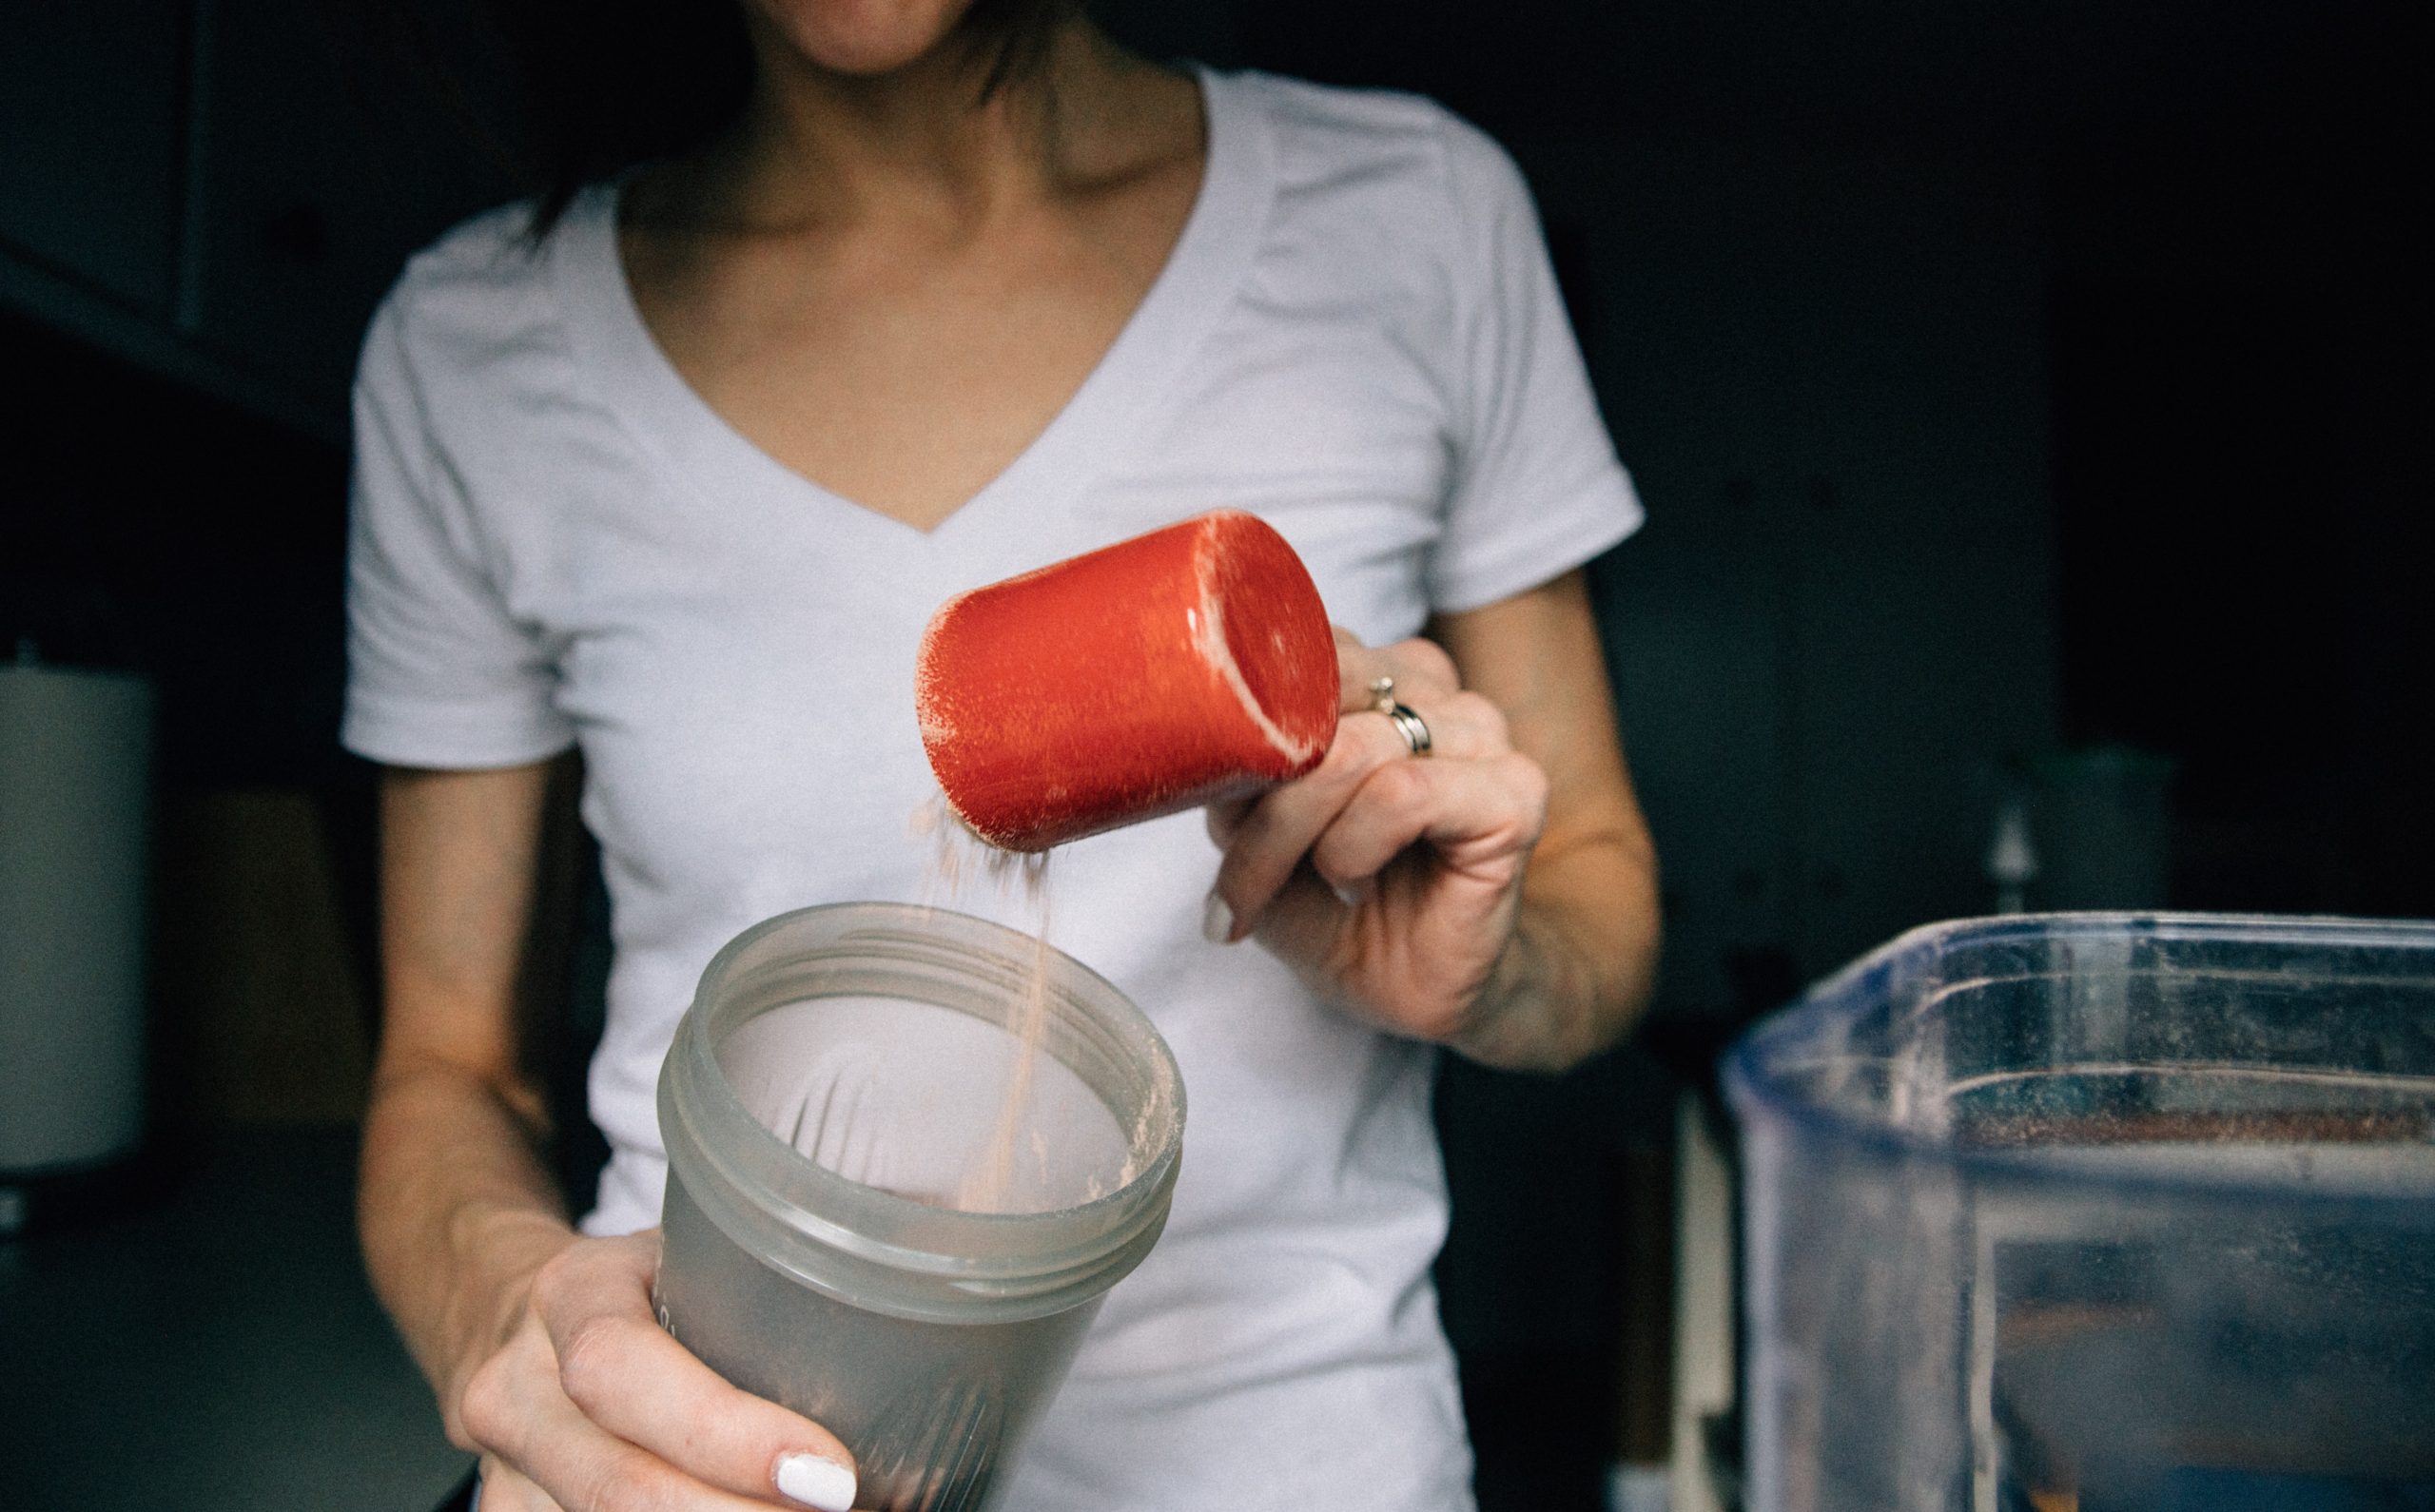 Woman preparing a protein shake using protein powder